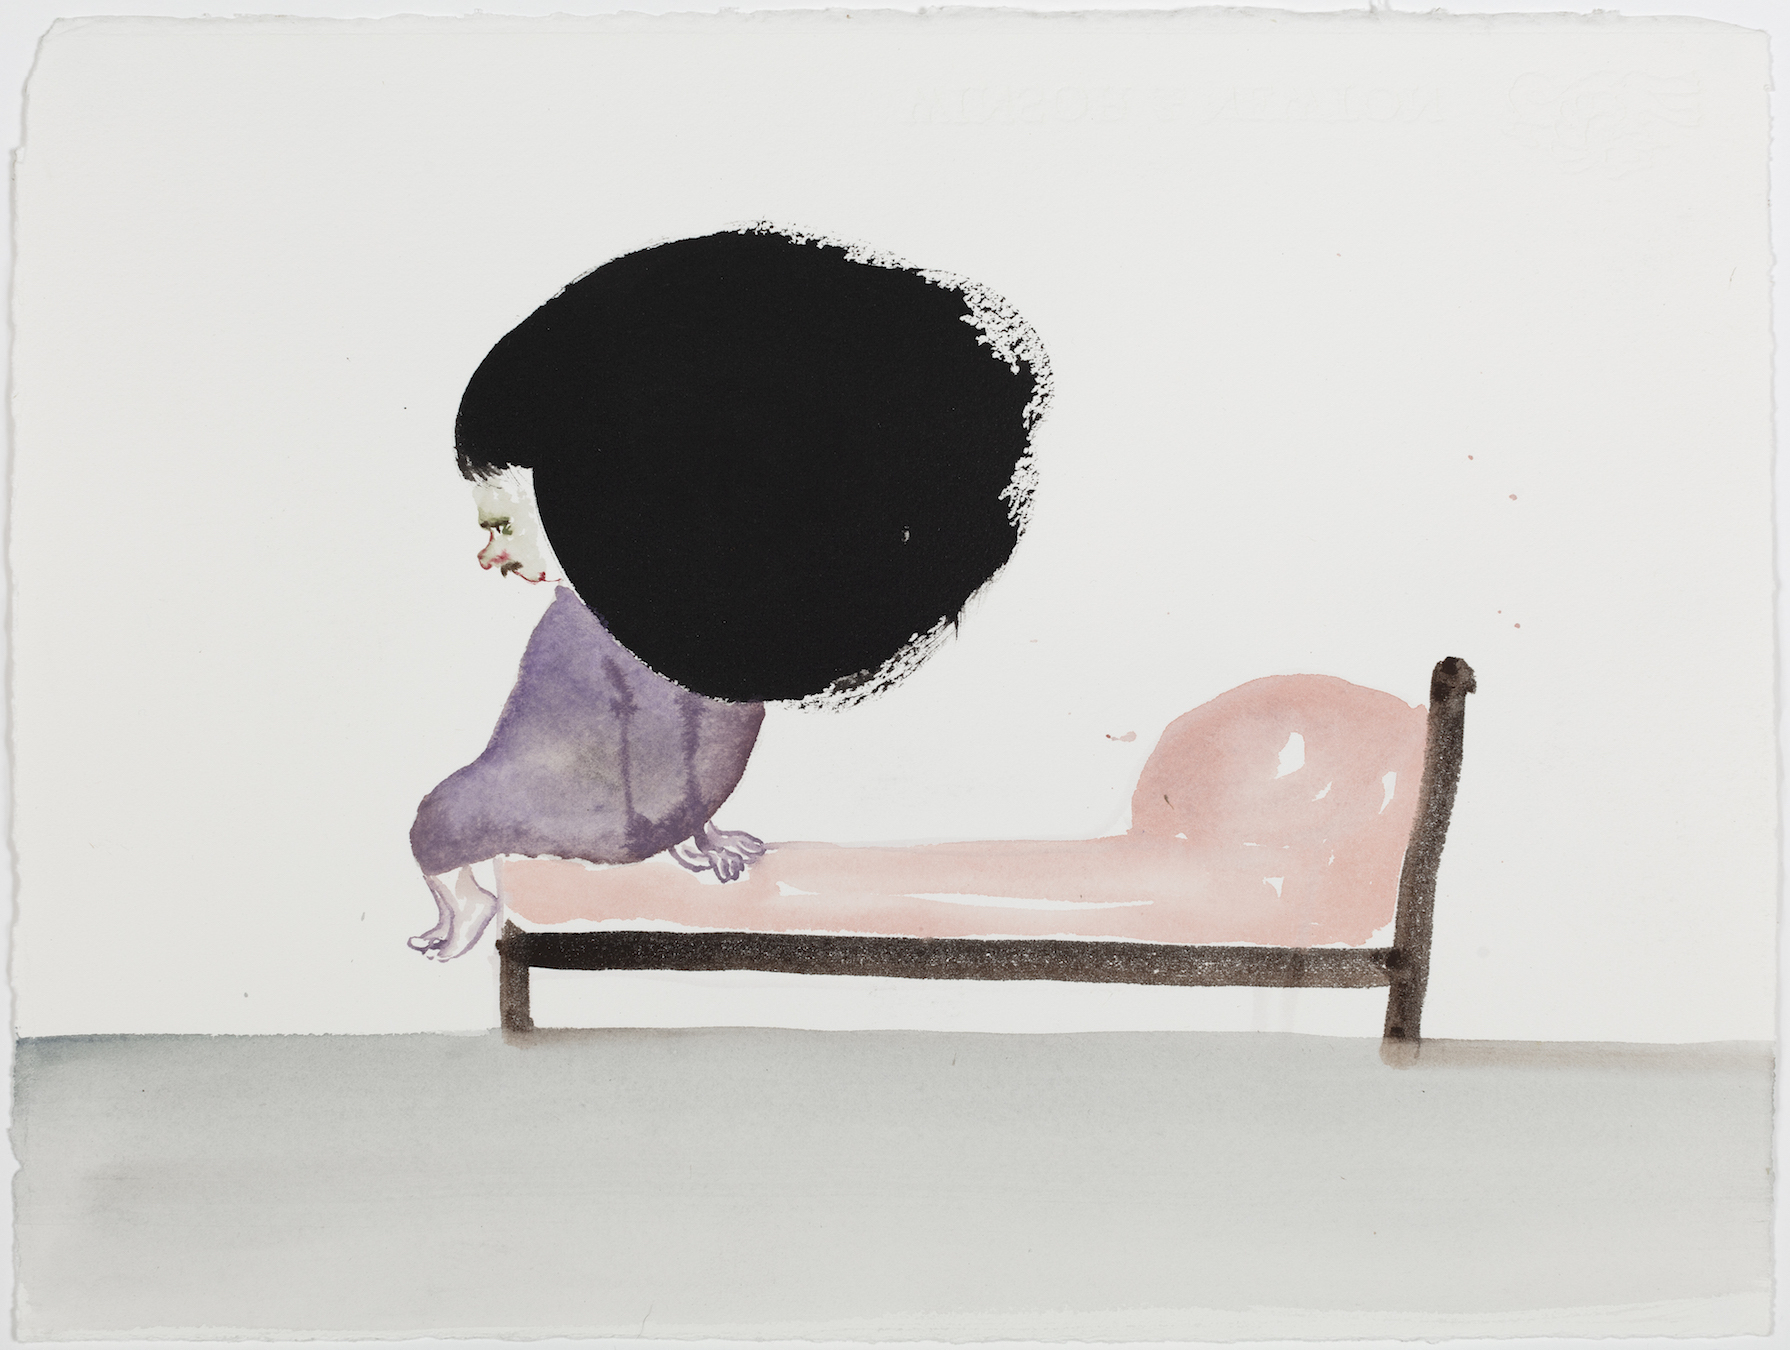 Sanya Kantarovsky, Dick Bed, 2020, Watercolor and ink on Arches paper, 28.6 x 37.5 cm / 11.3 x 14.8 inches © Sanya Kantarovsky. Courtesy Capitain Petzel, Berlin. Ph: CHROMA